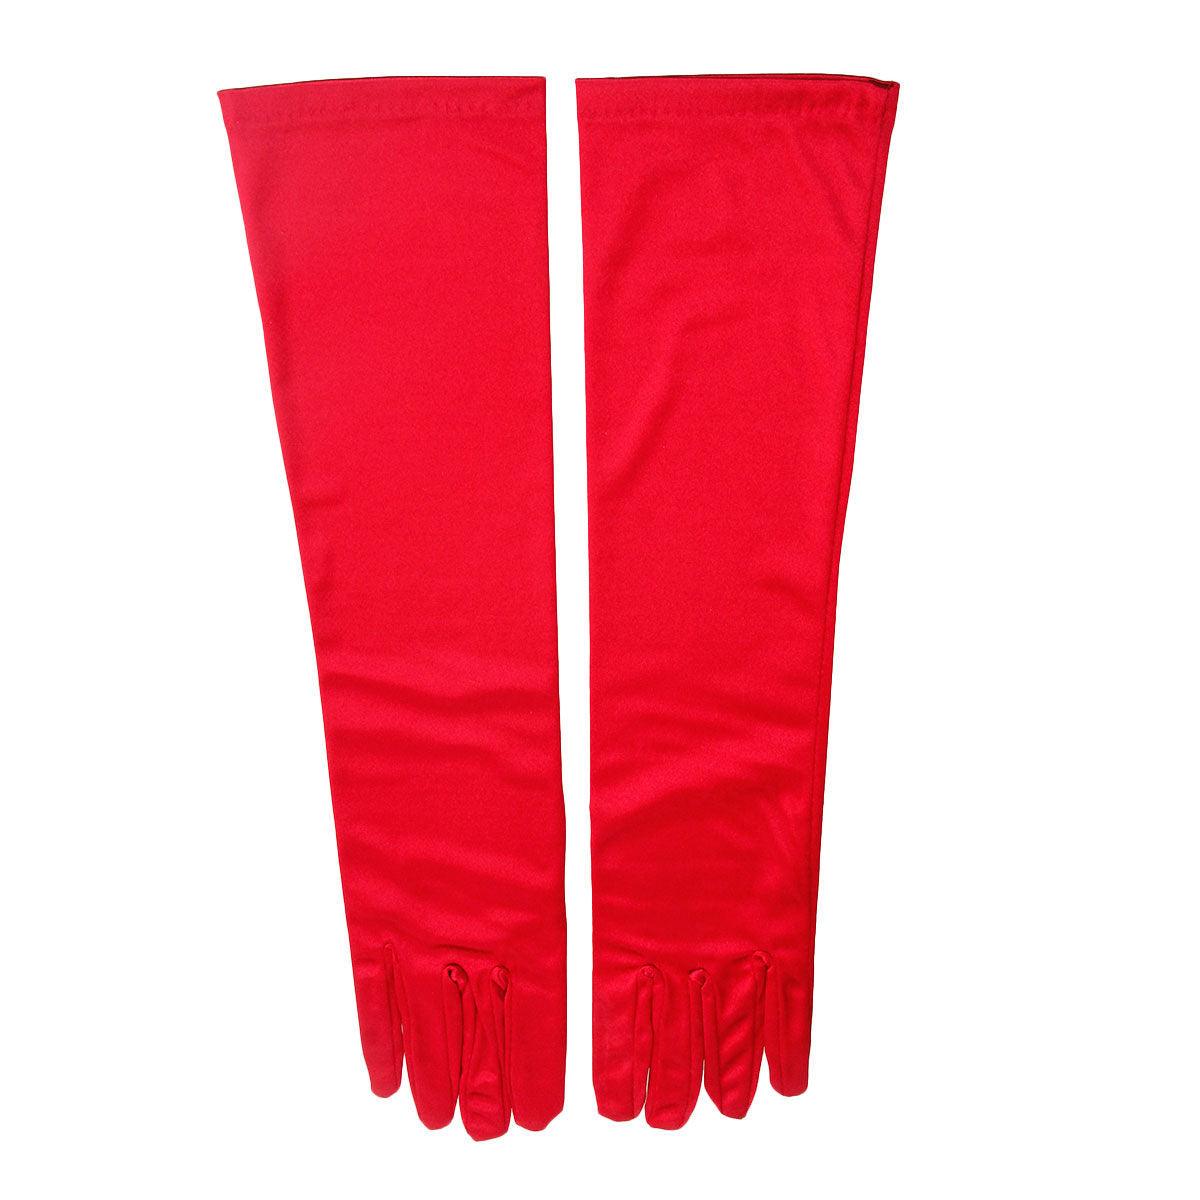 Long Burgundy-red Satin Finish Formal Bridal Gloves